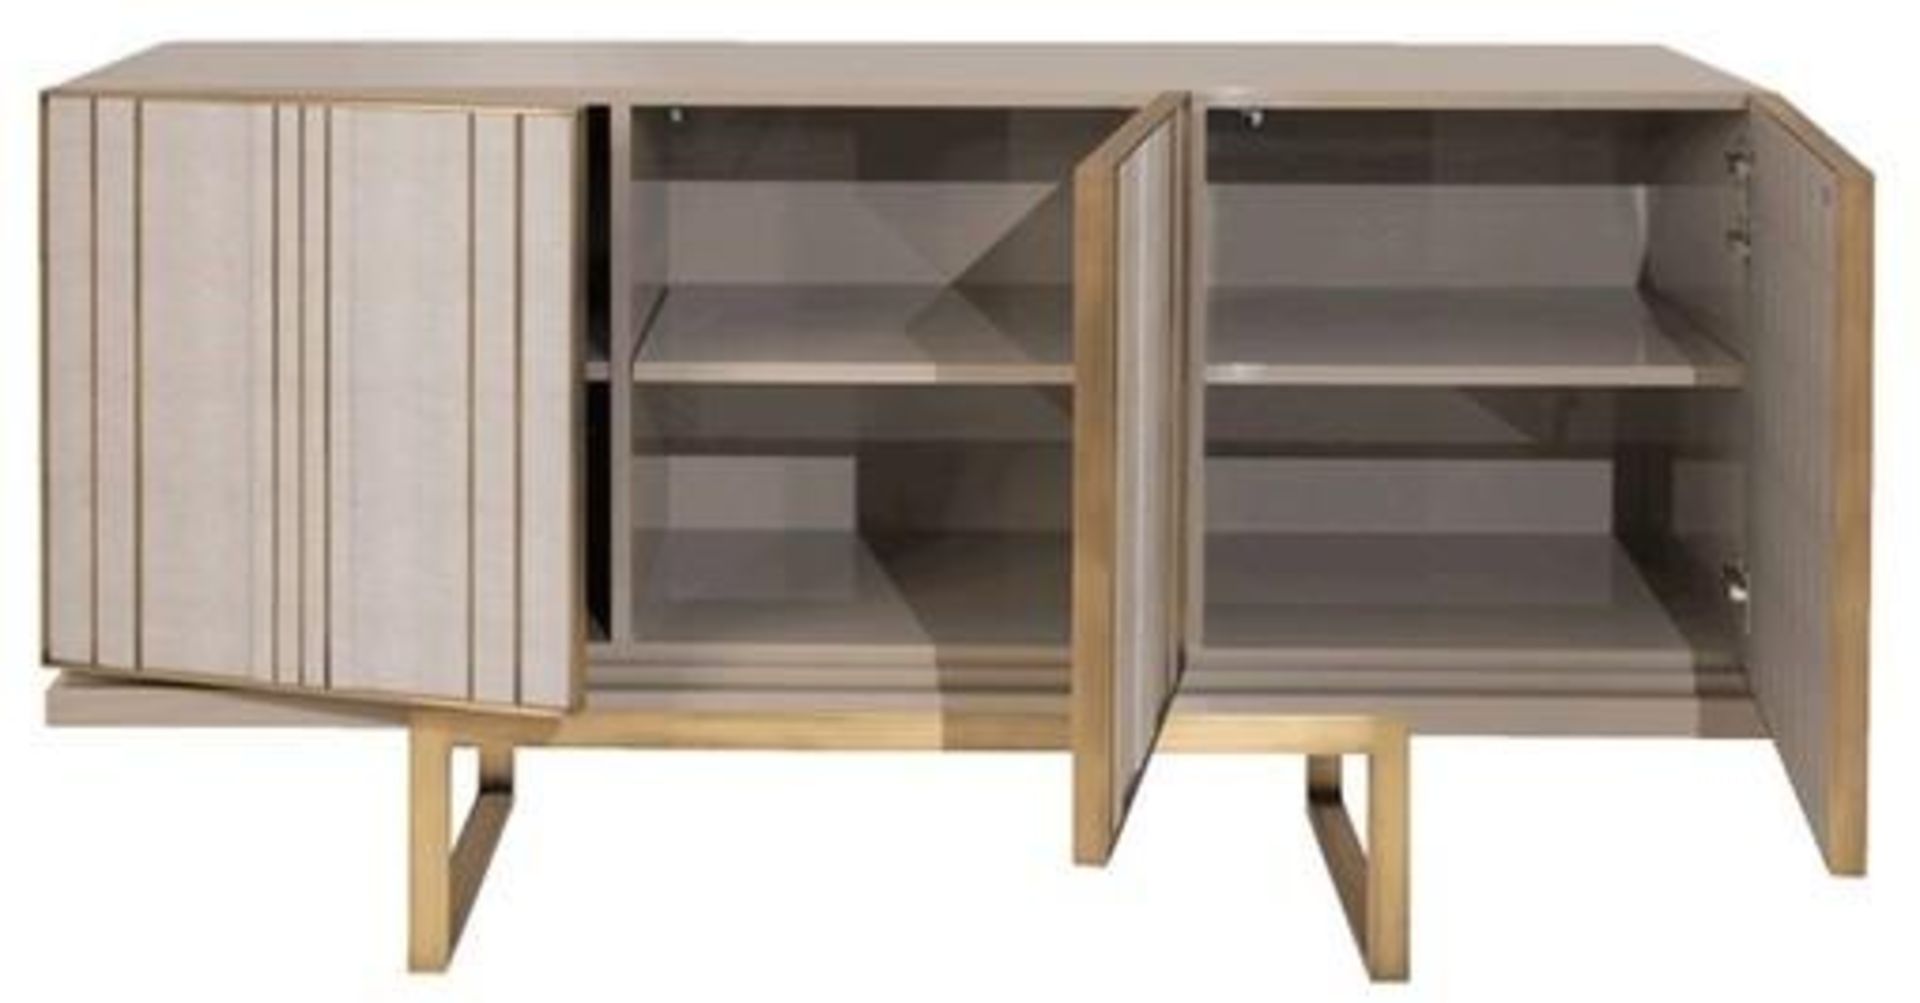 1 x FRATO 'Ascot' Designer Sideboard - Dimensions: W170 x D50 x H90cm - Original Price £3,249 - Ref: - Image 6 of 13